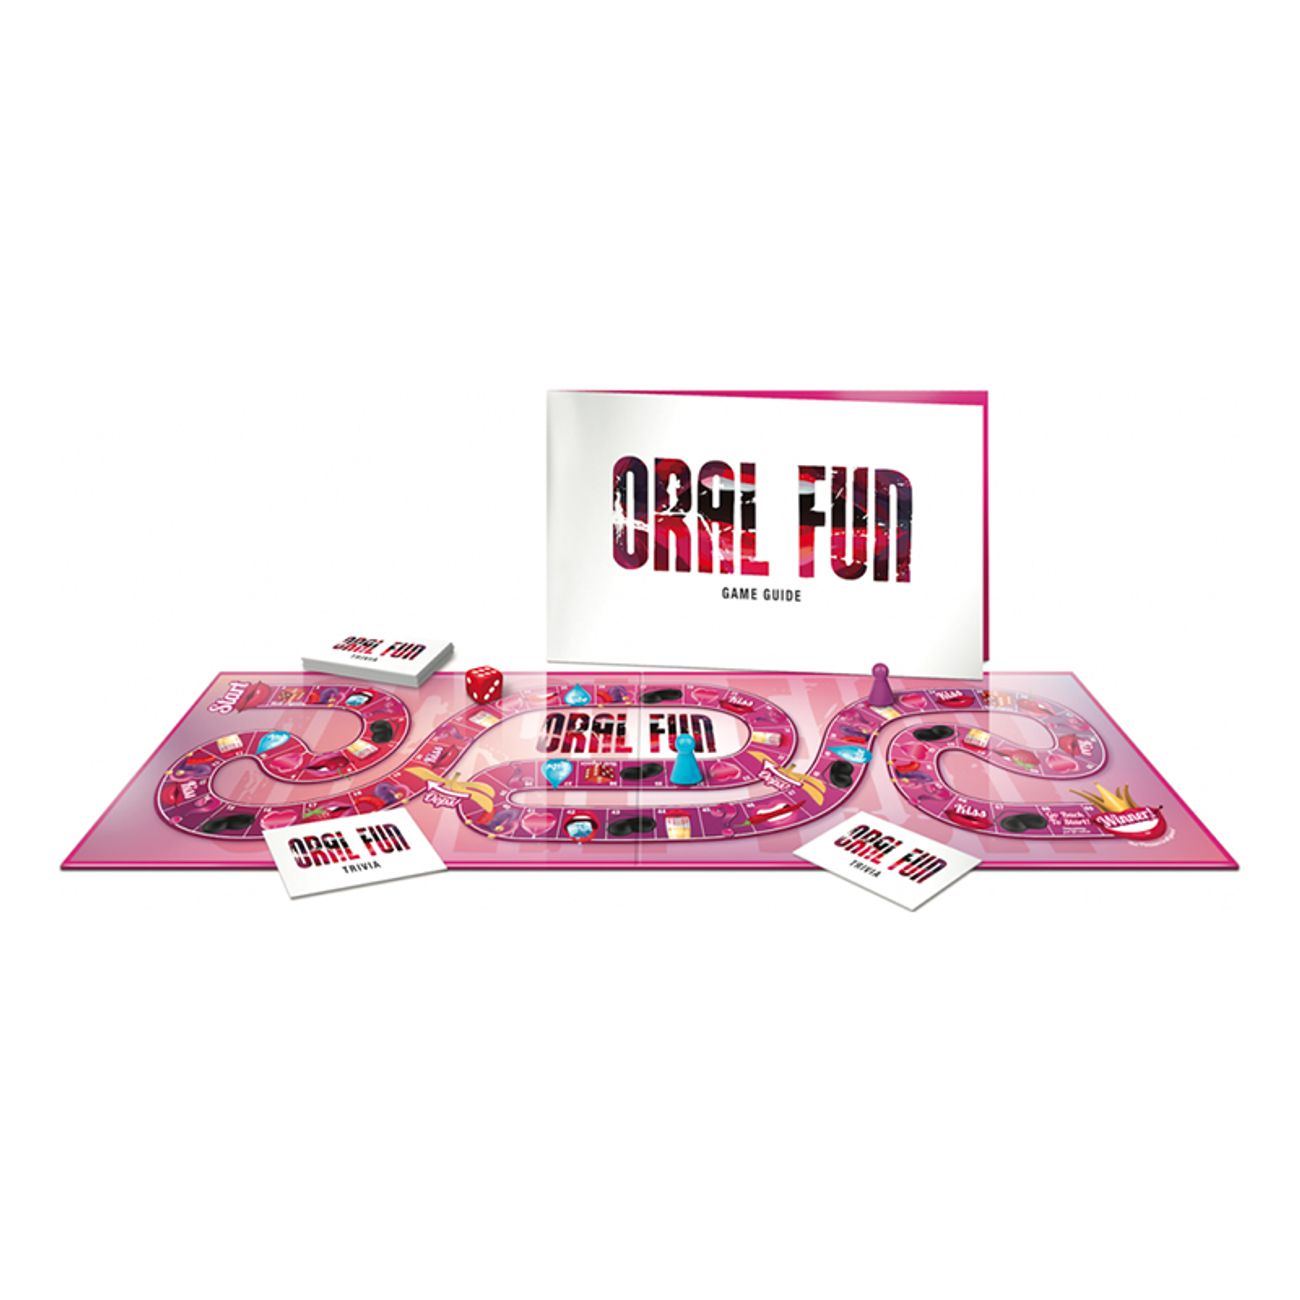 oral-fun-game-vuxenspel-1